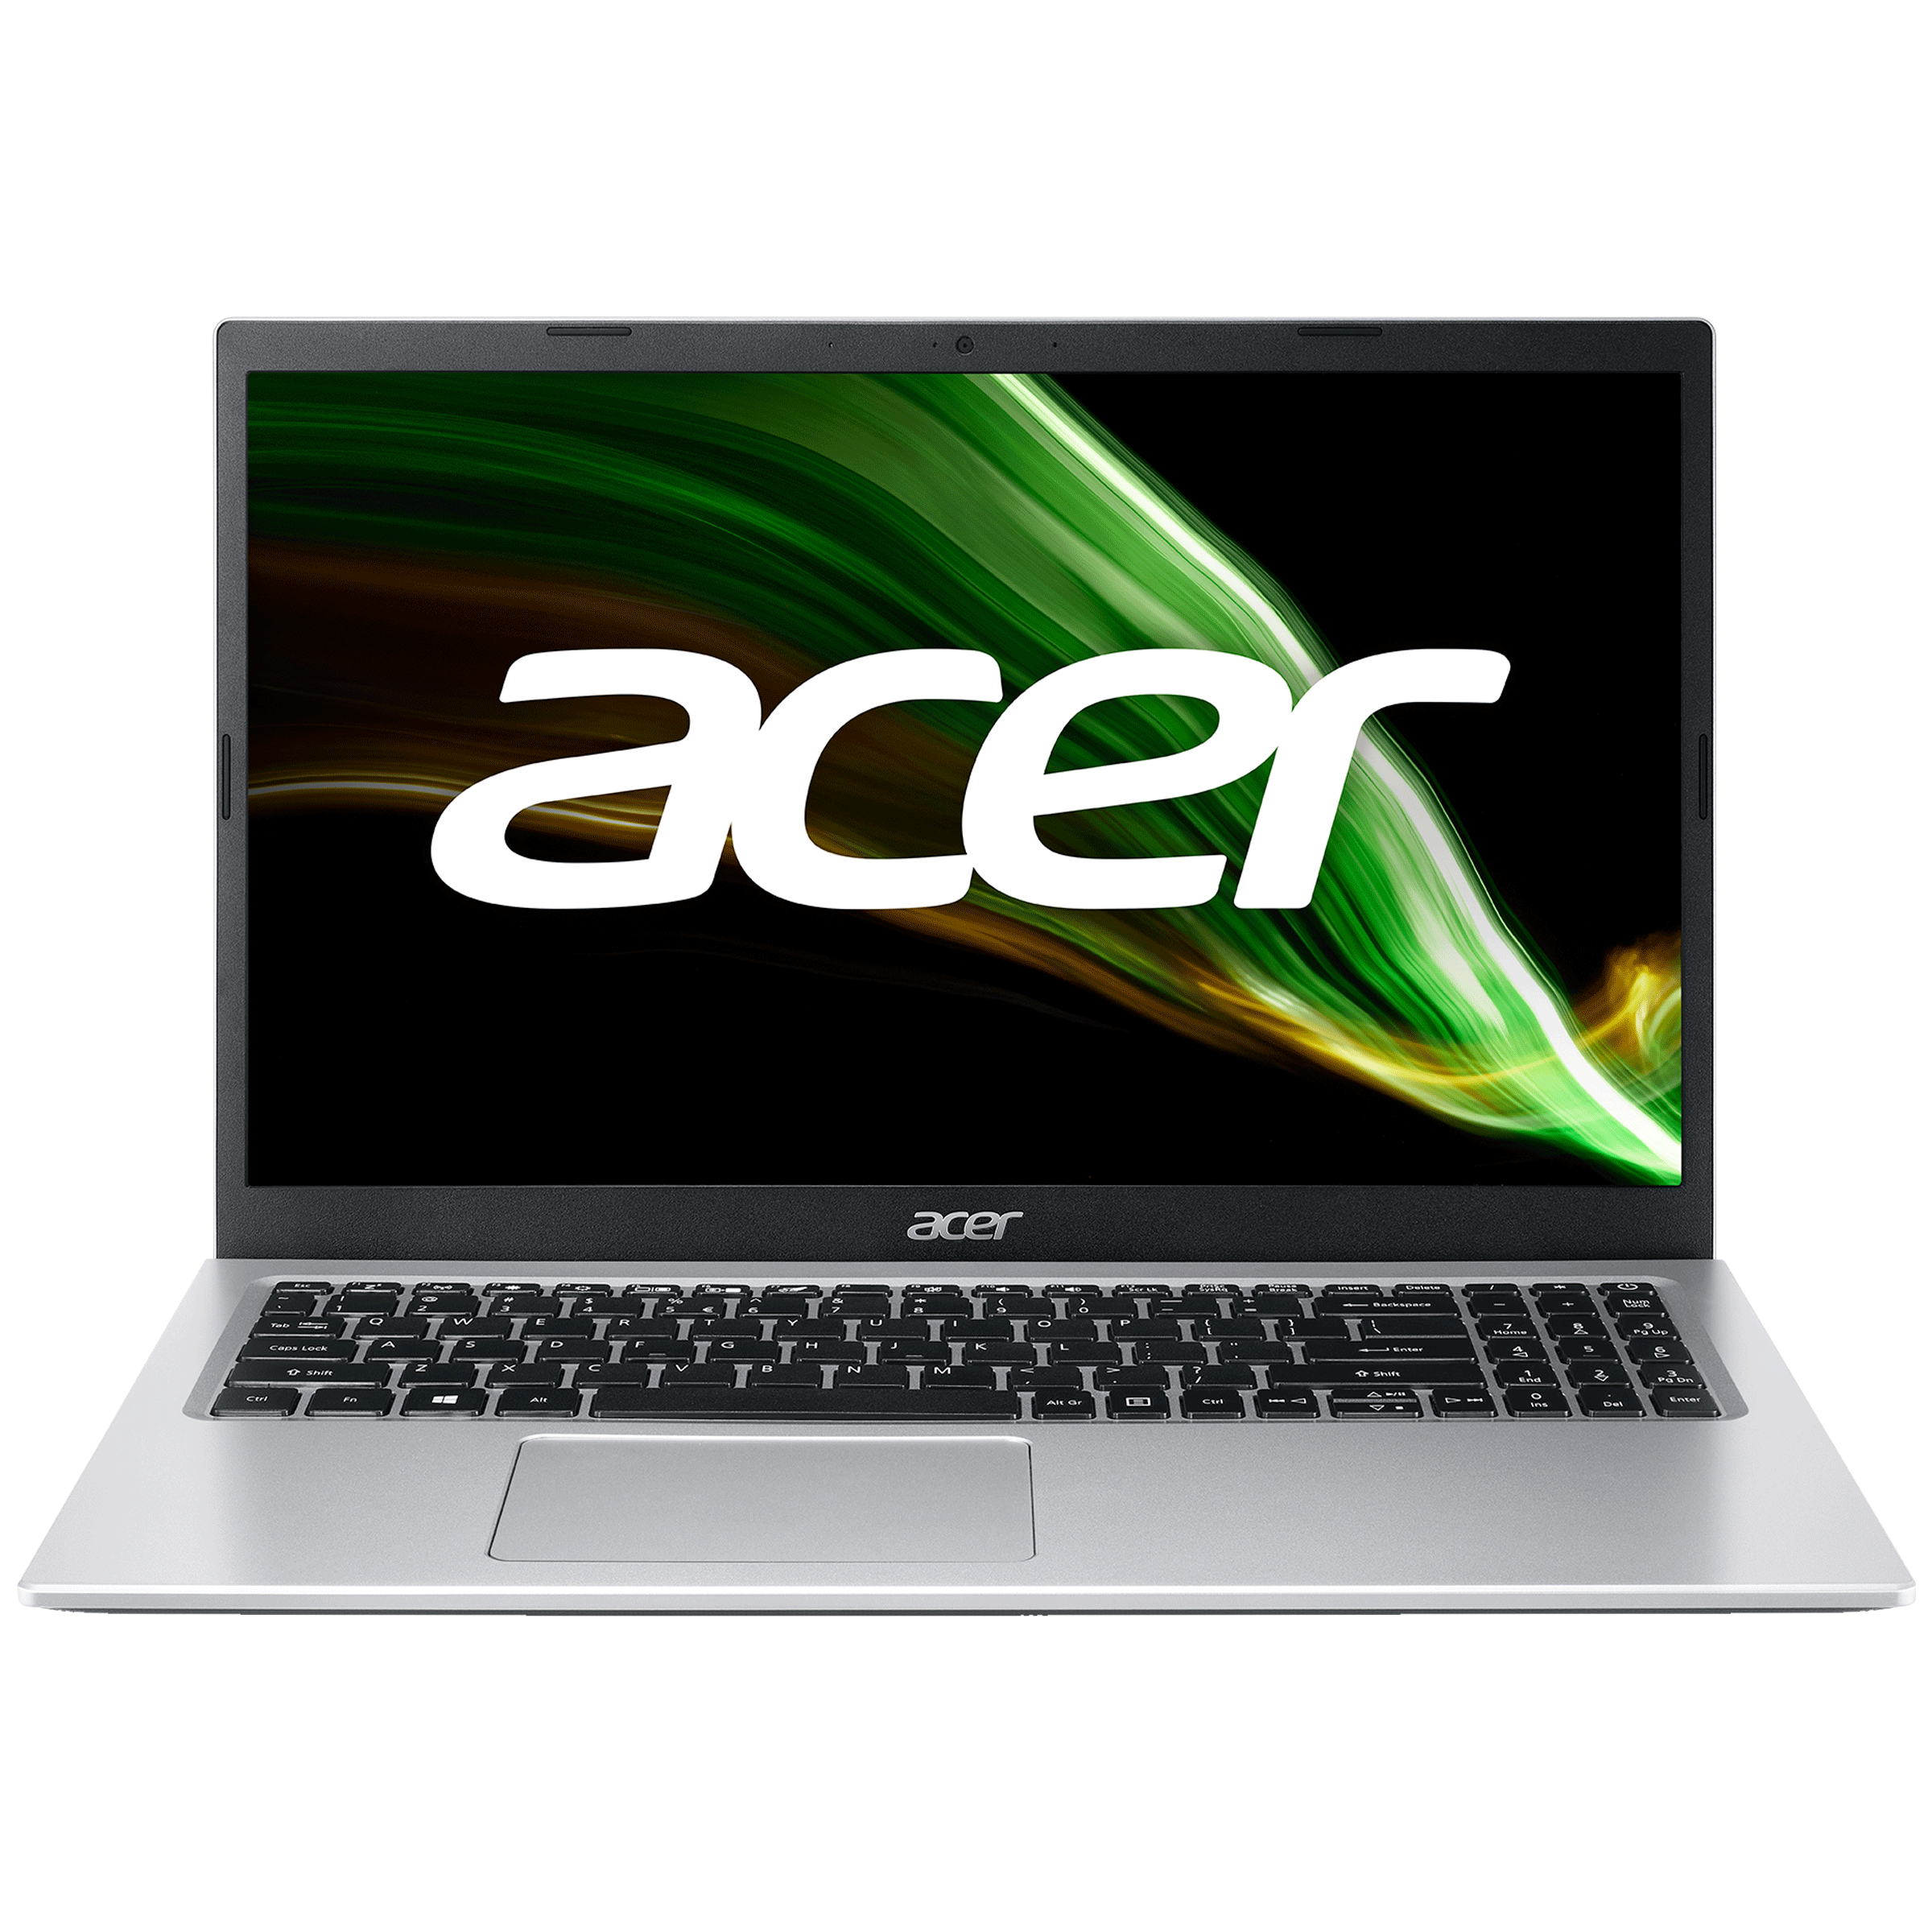 Acer A315-58 11th Gen Core i3 Windows 10 Laptop (8GB RAM, 512GB SSD, Intel UHD Graphics, MS Office, 39.62cm, UN.ADDSI.023, Silver)_1